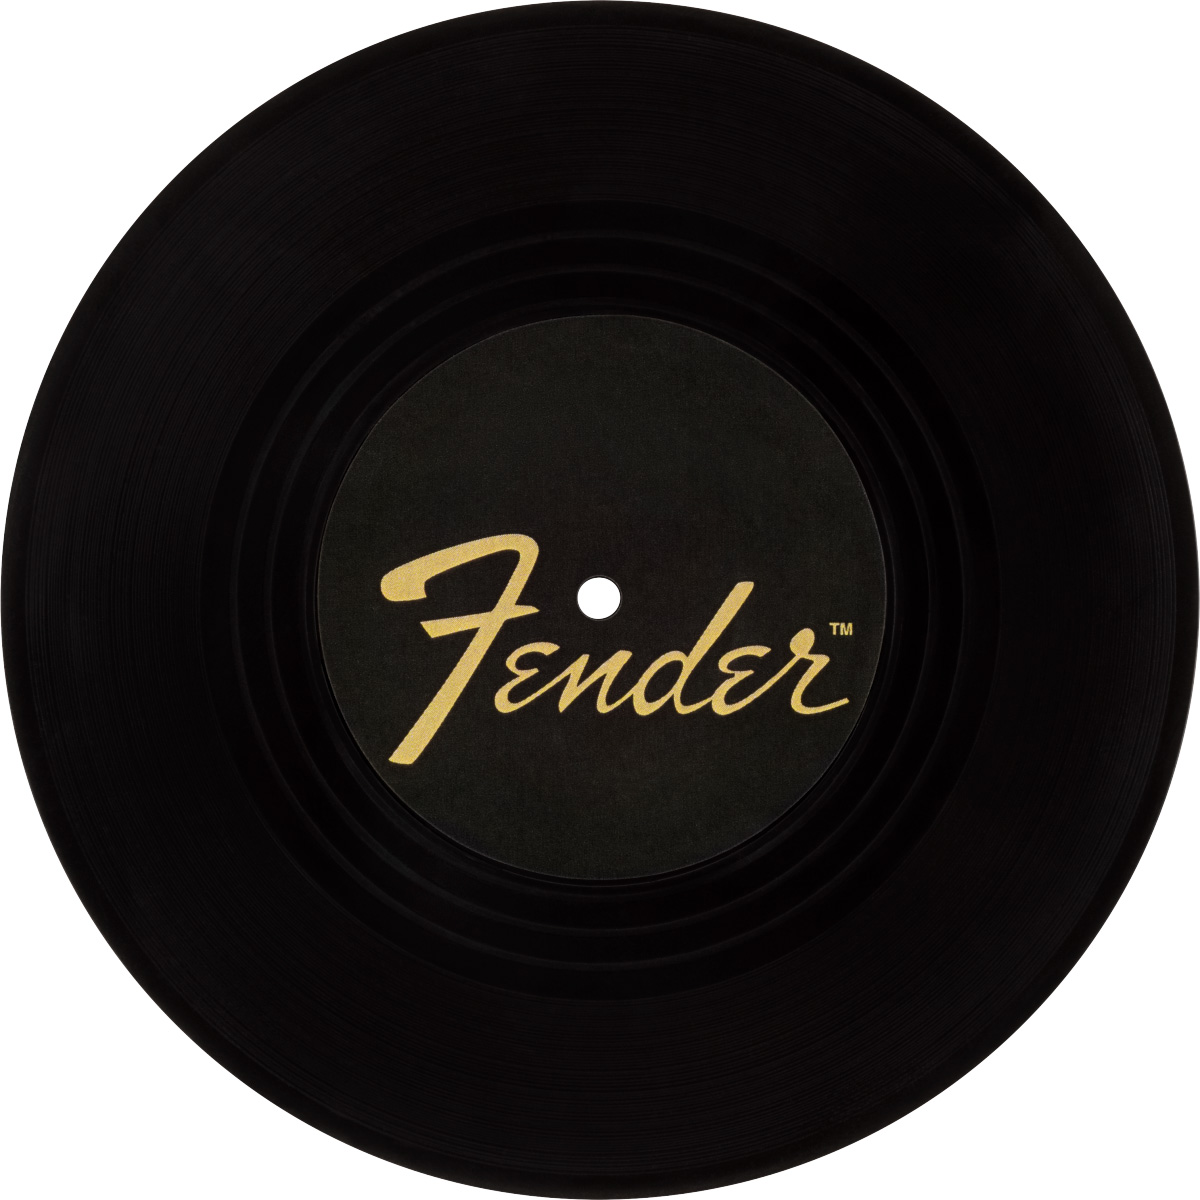 Fender Sunburst Turntable Coaster Set コースターセット フェンダー 